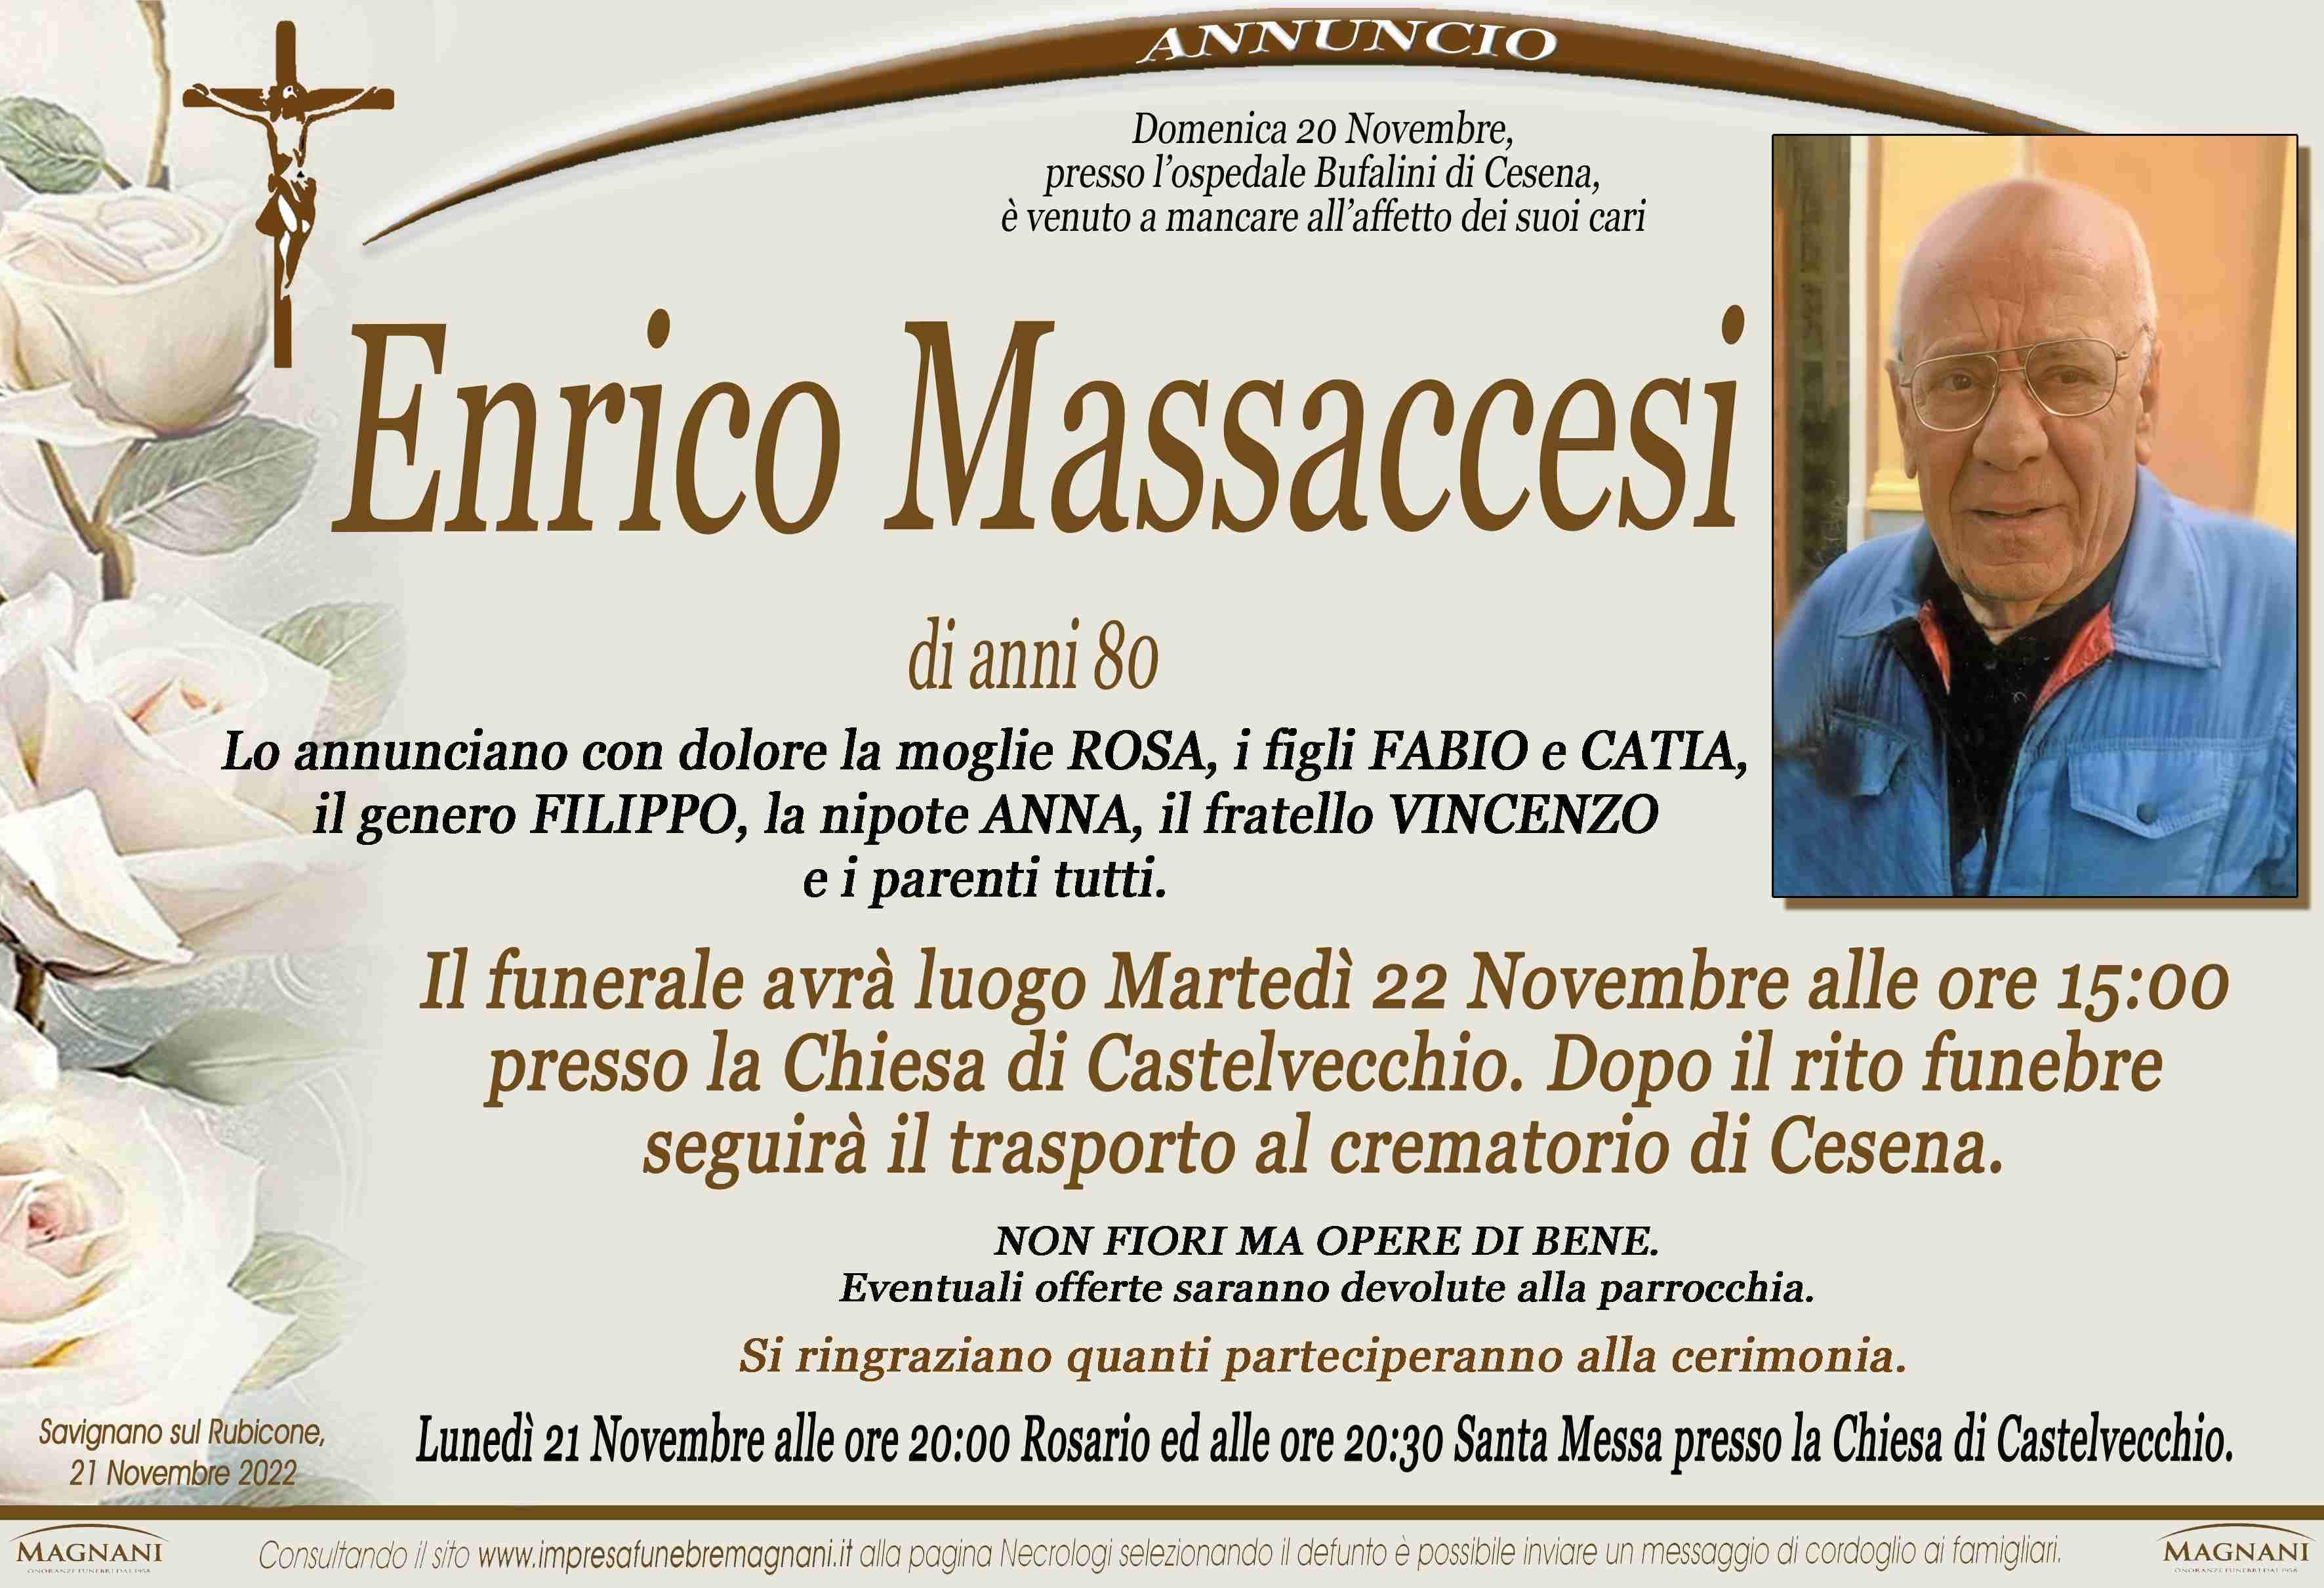 Enrico Massaccesi